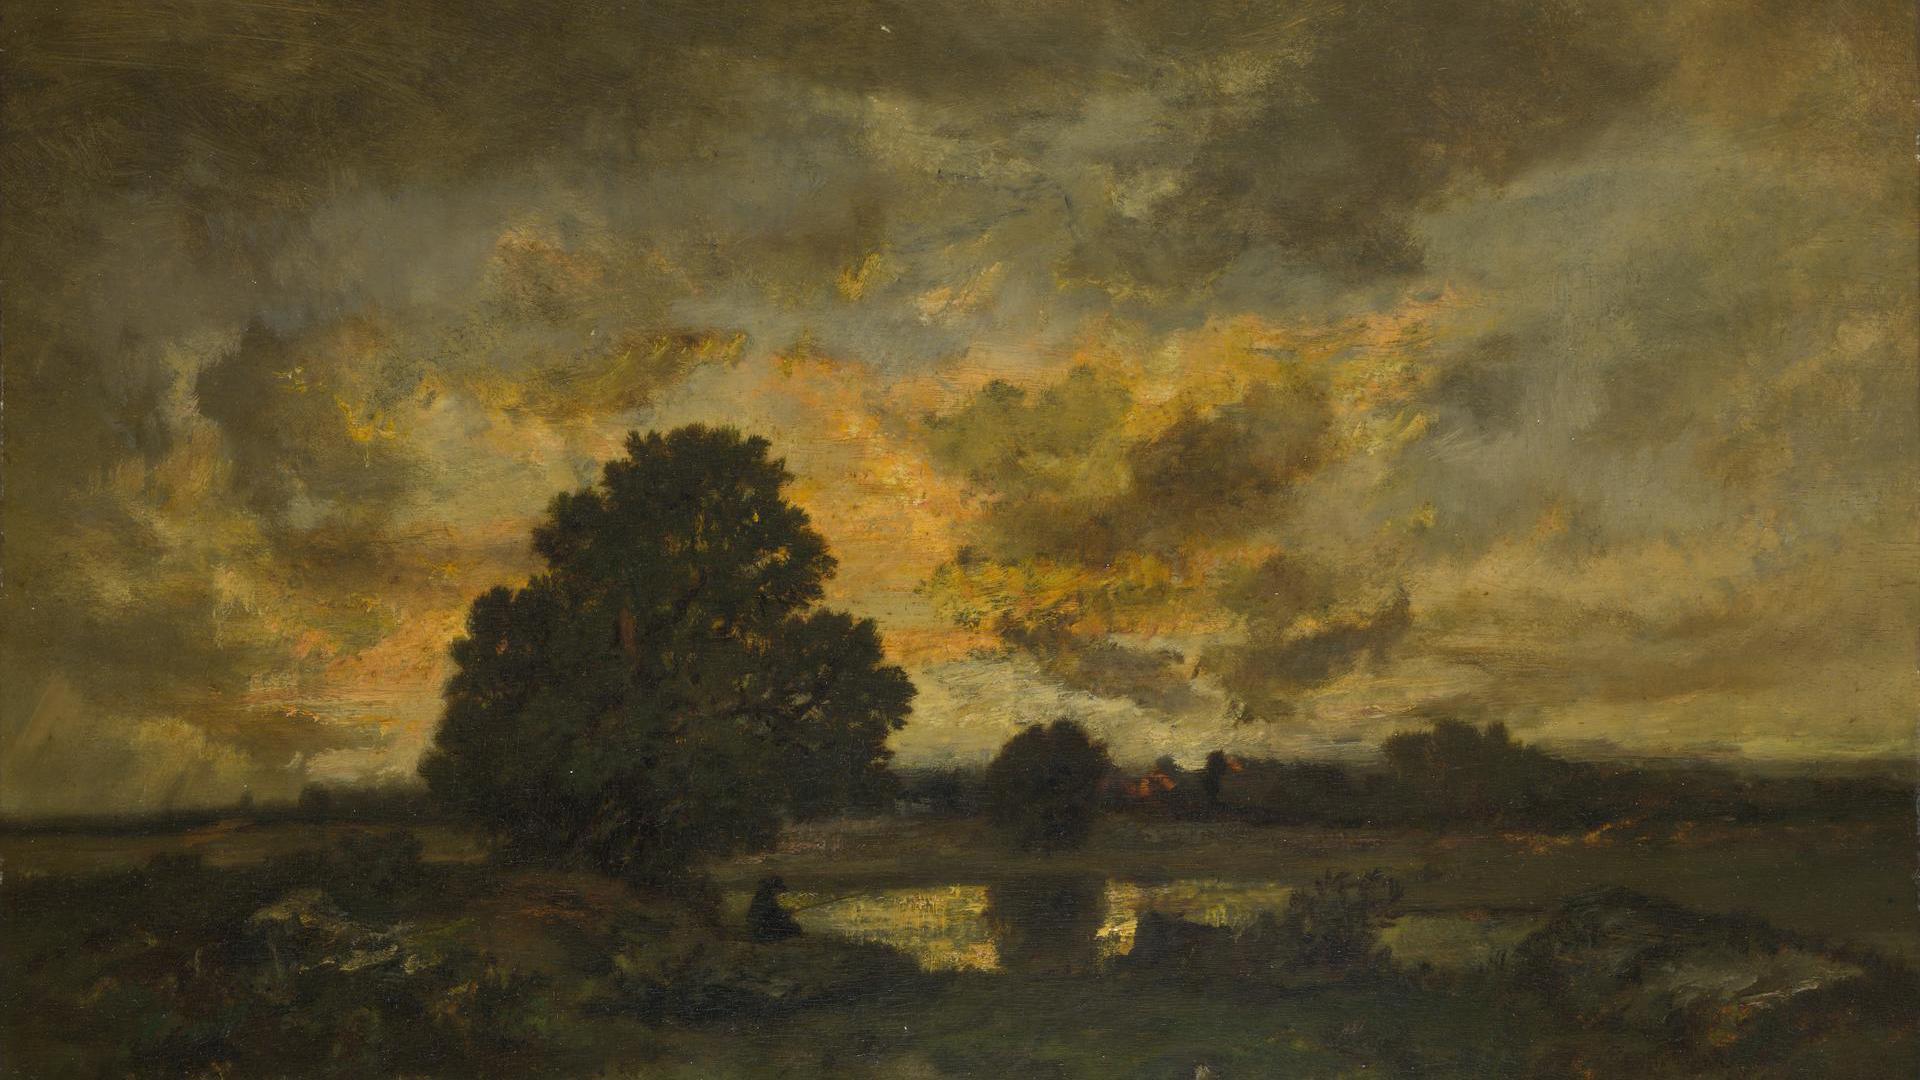 Common with Stormy Sunset by Narcisse-Virgilio Diaz de la Peña